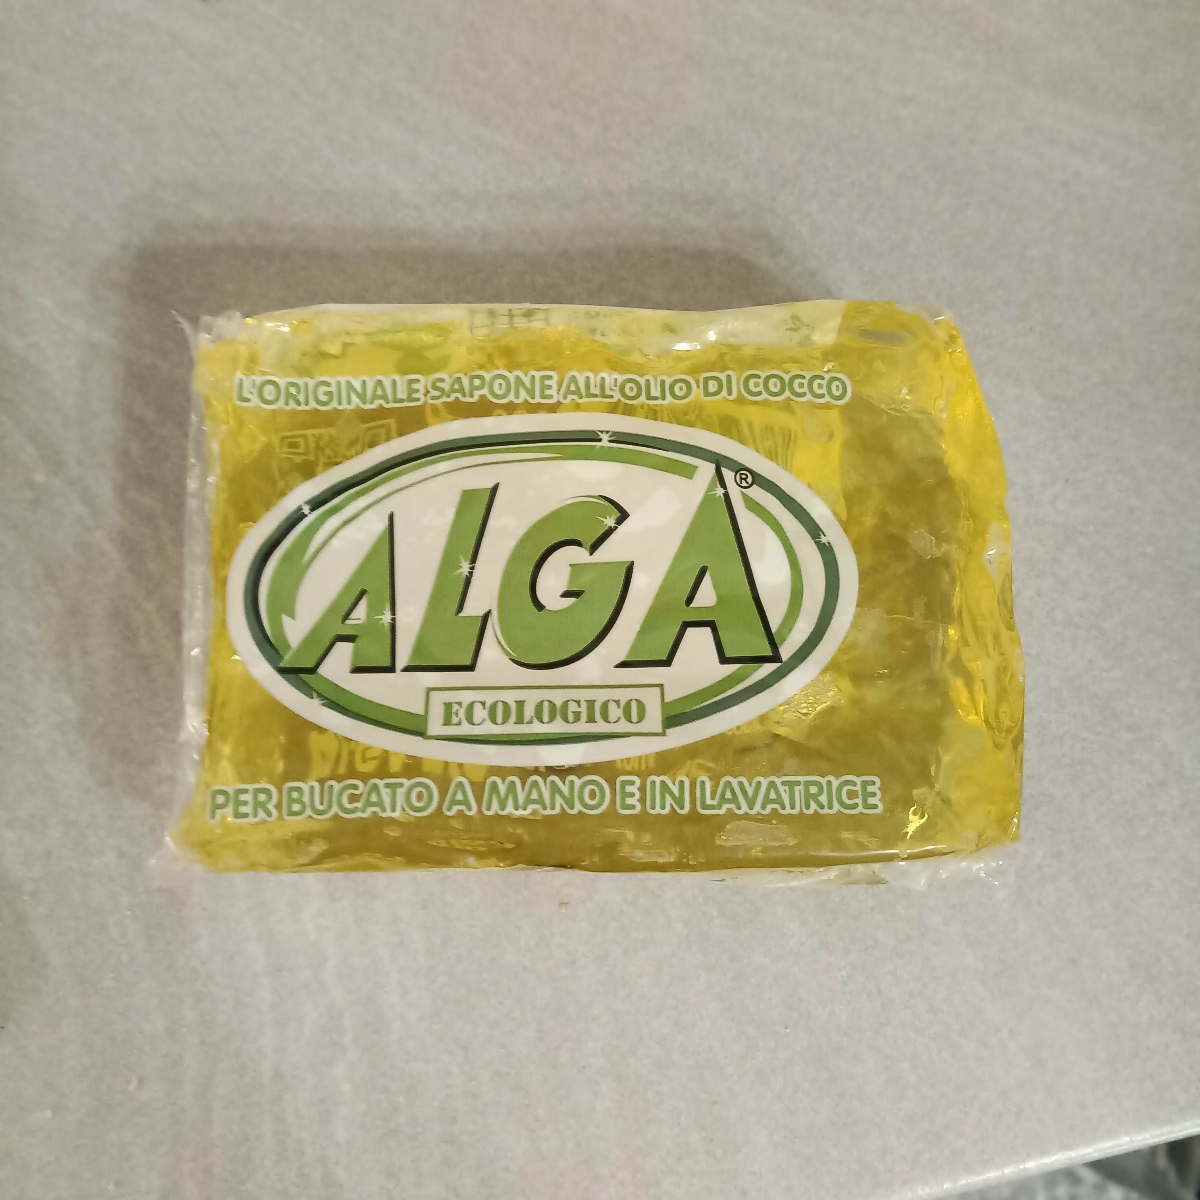 Alga Soap Review